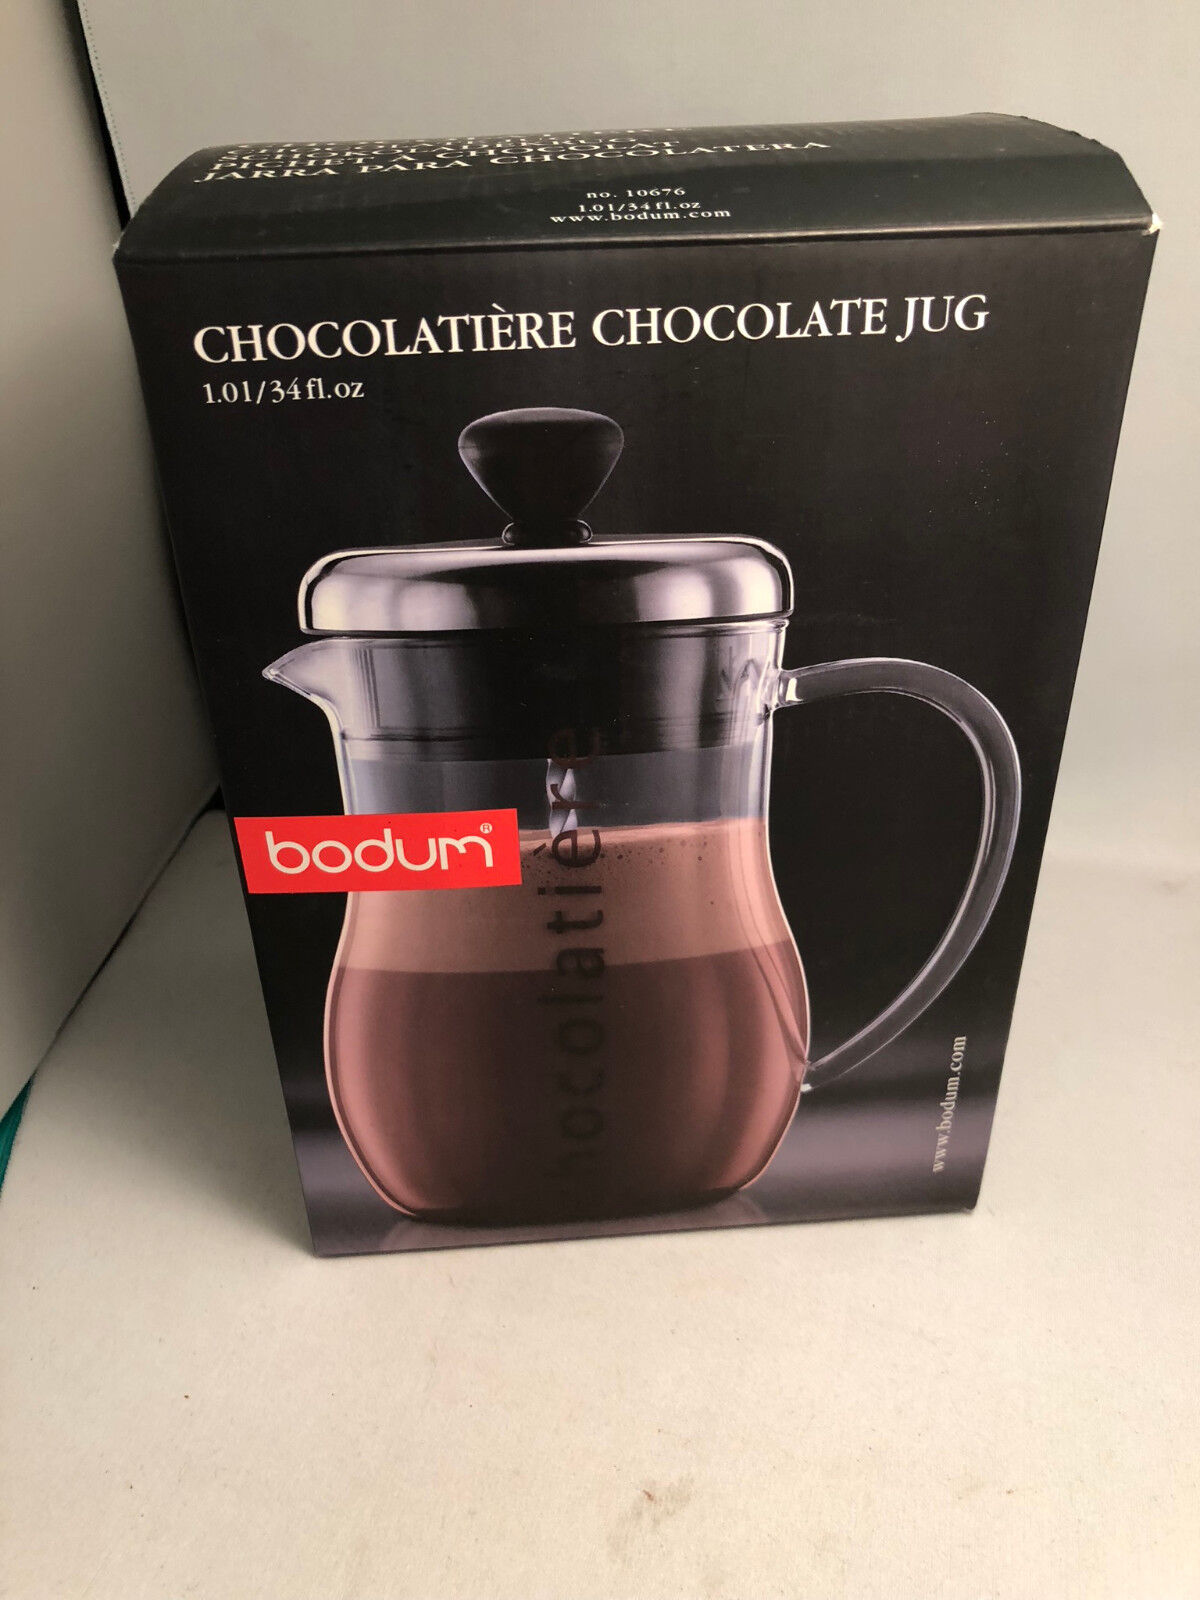 Bodum Chocolate Jug Chocolatiere Hot Milk Frothier Glass Jug Box